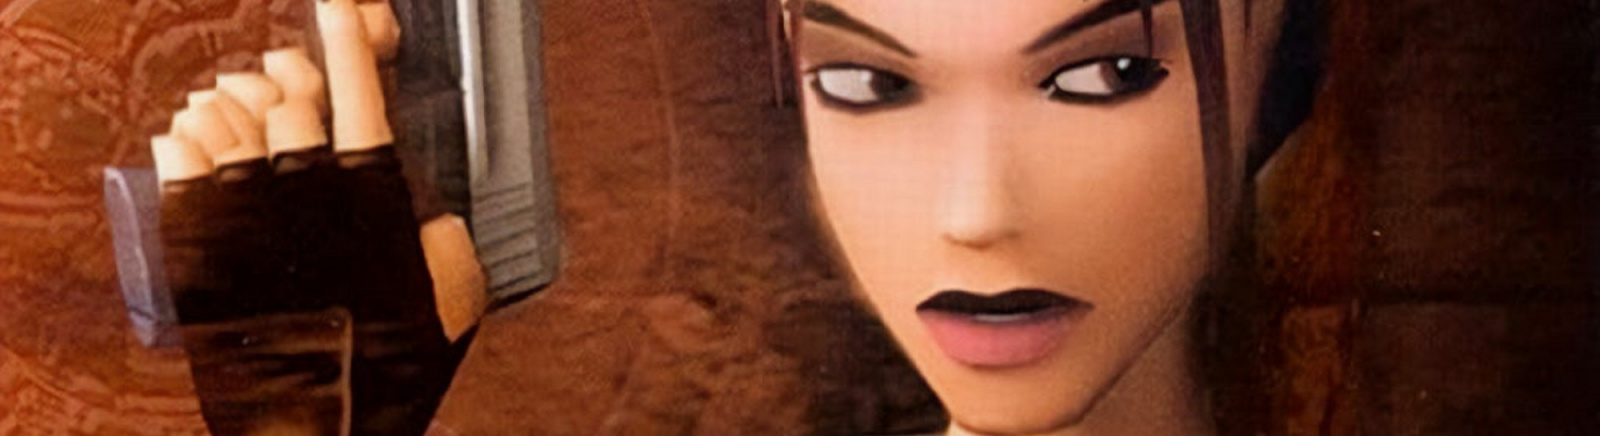 Дата выхода Tomb Raider: The Prophecy  на Game Boy Advance в России и во всем мире